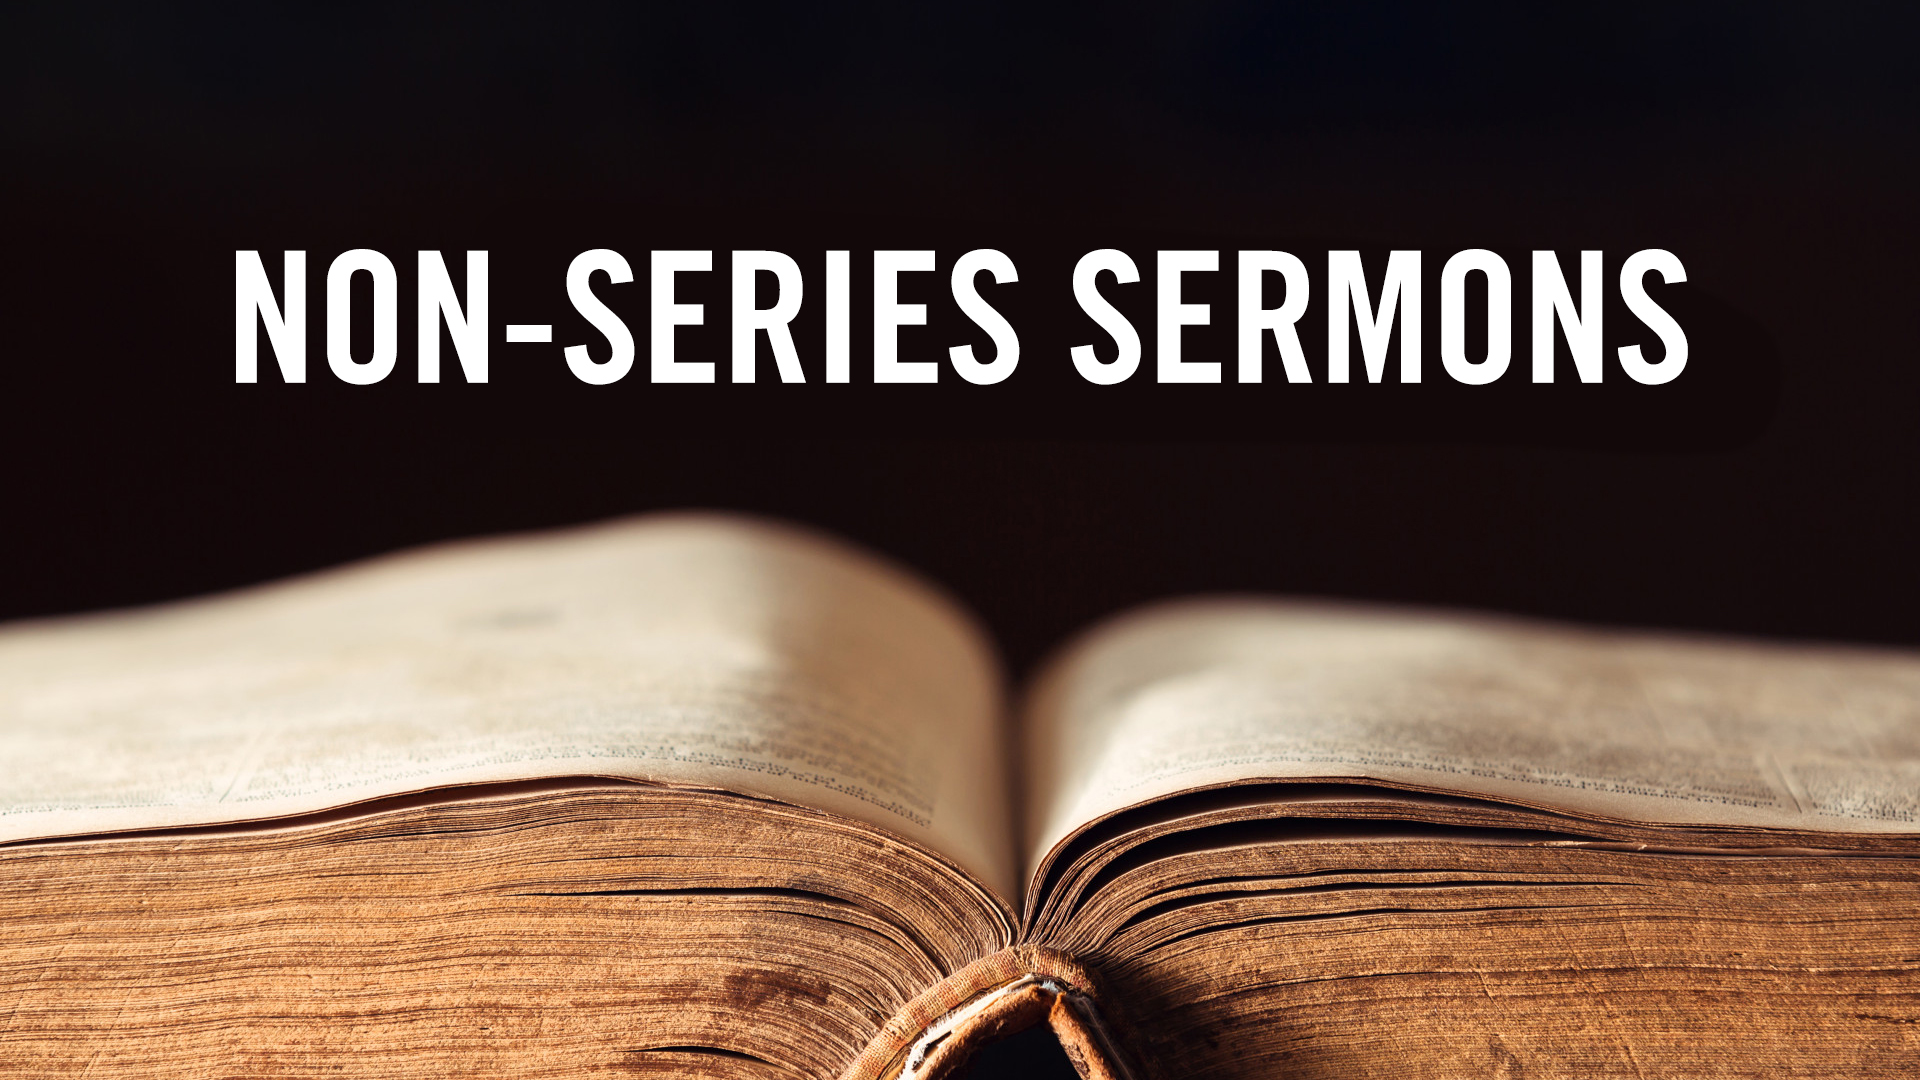 Non-series sermons